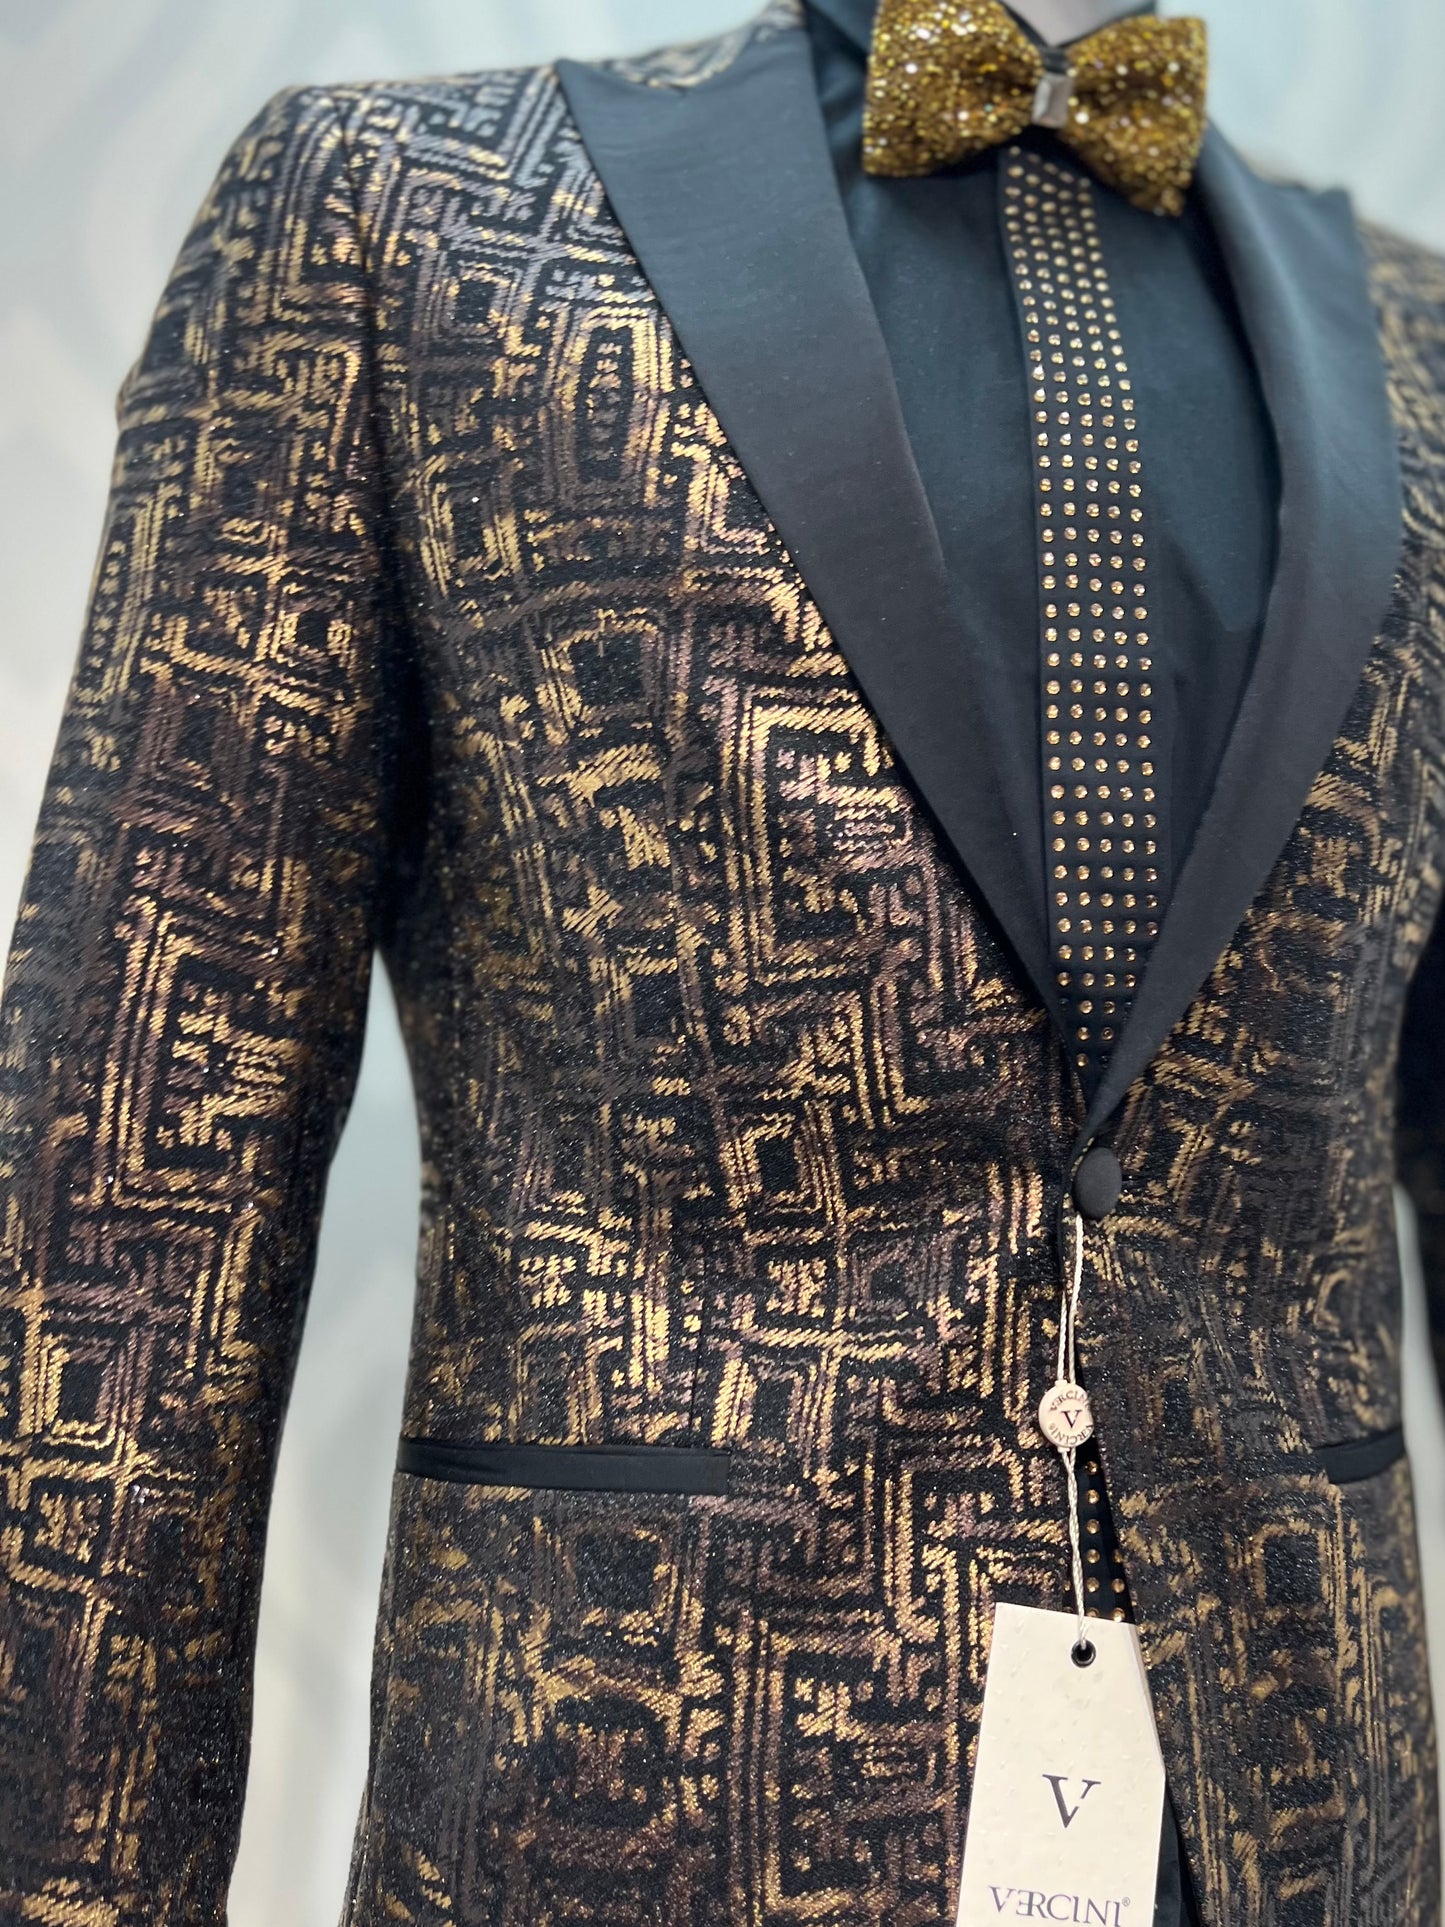 Exquisite Gold Square Pattern Black Tuxedo with Silk Lapel